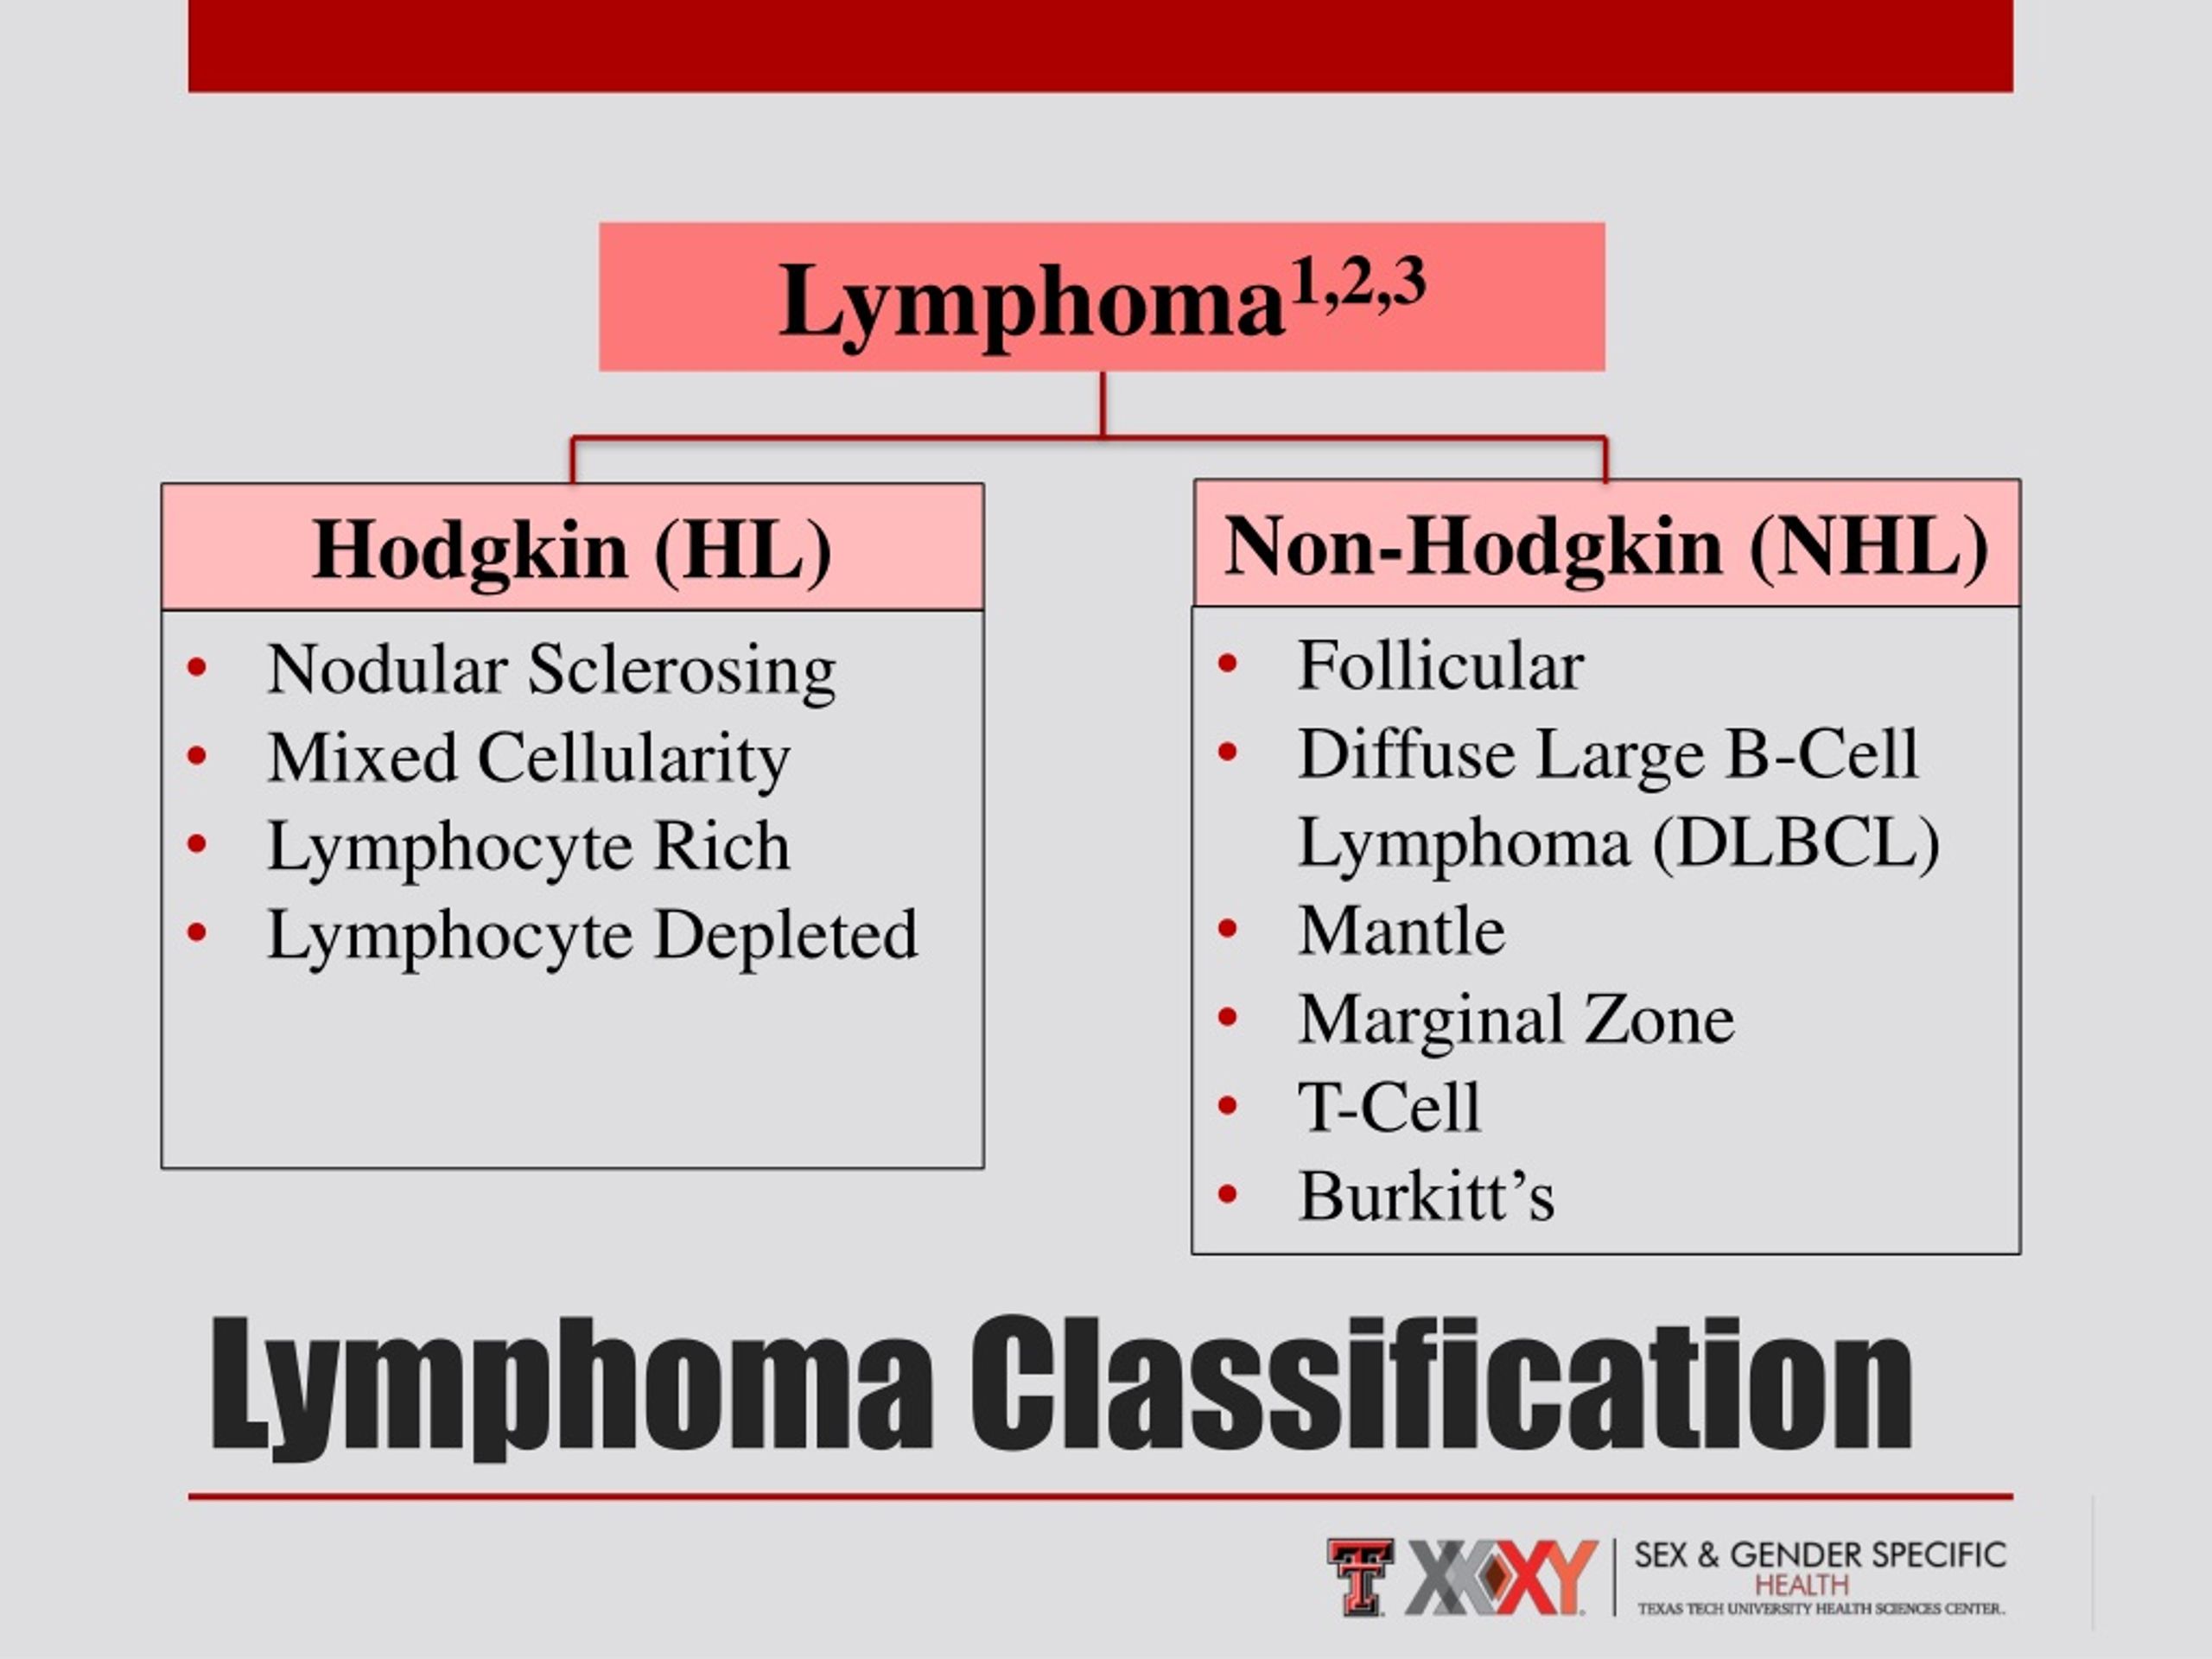 typical presentation of lymphoma